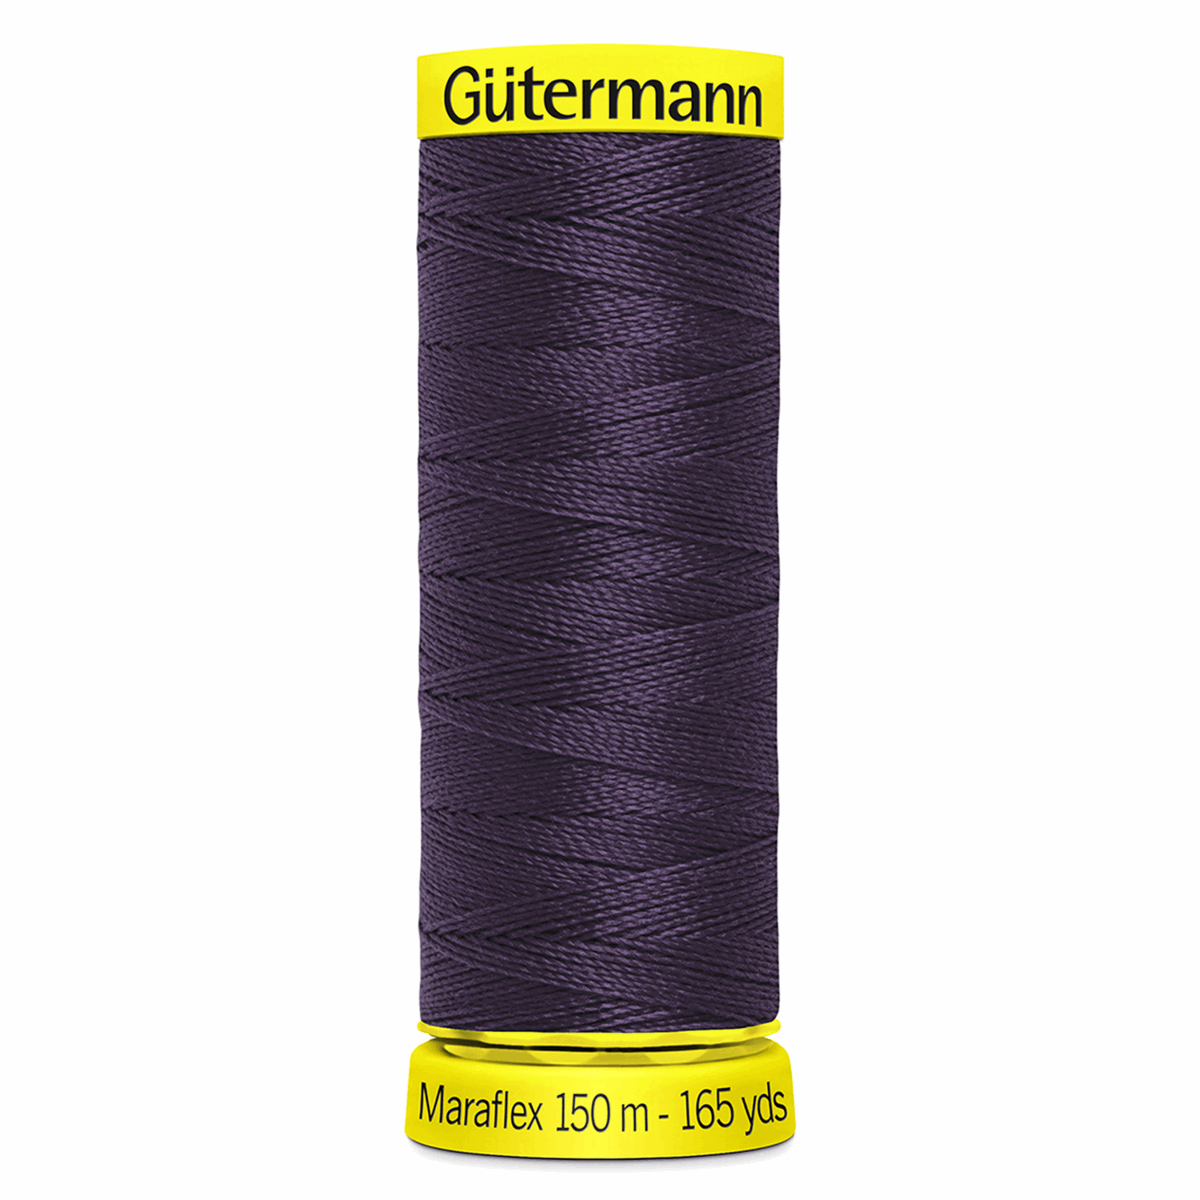 Gutermann Maraflex Elastic Sewing Thread 150m Aubergine 512